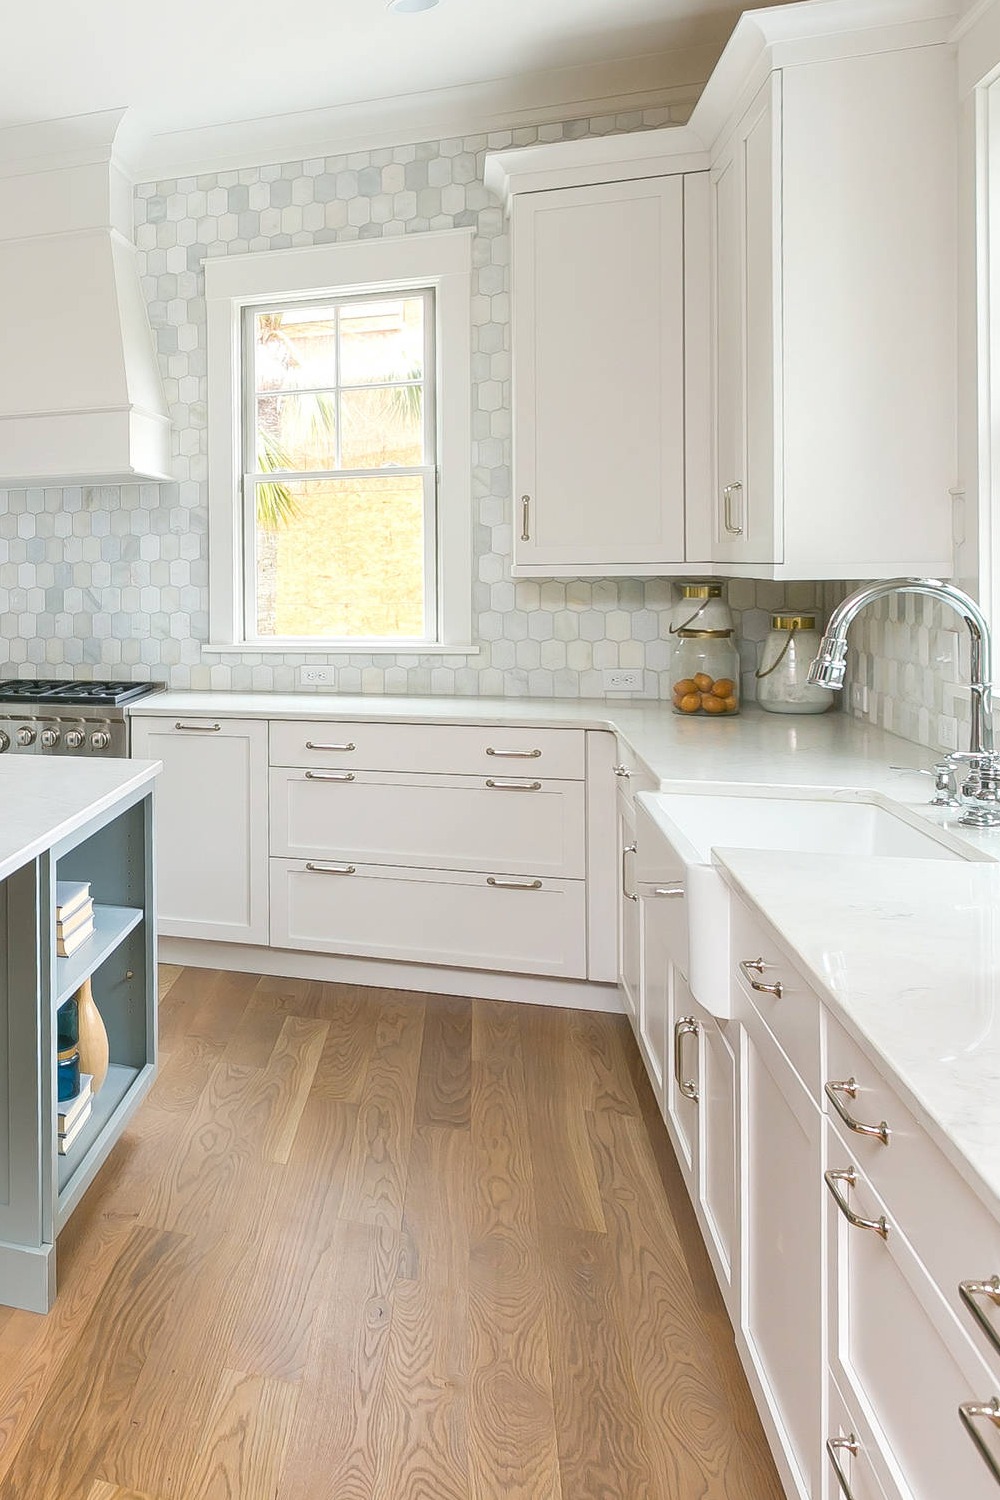 White Quartz Countertop Contemporary Kitchen Interior Designs Clean Lines Perfect Match Tile